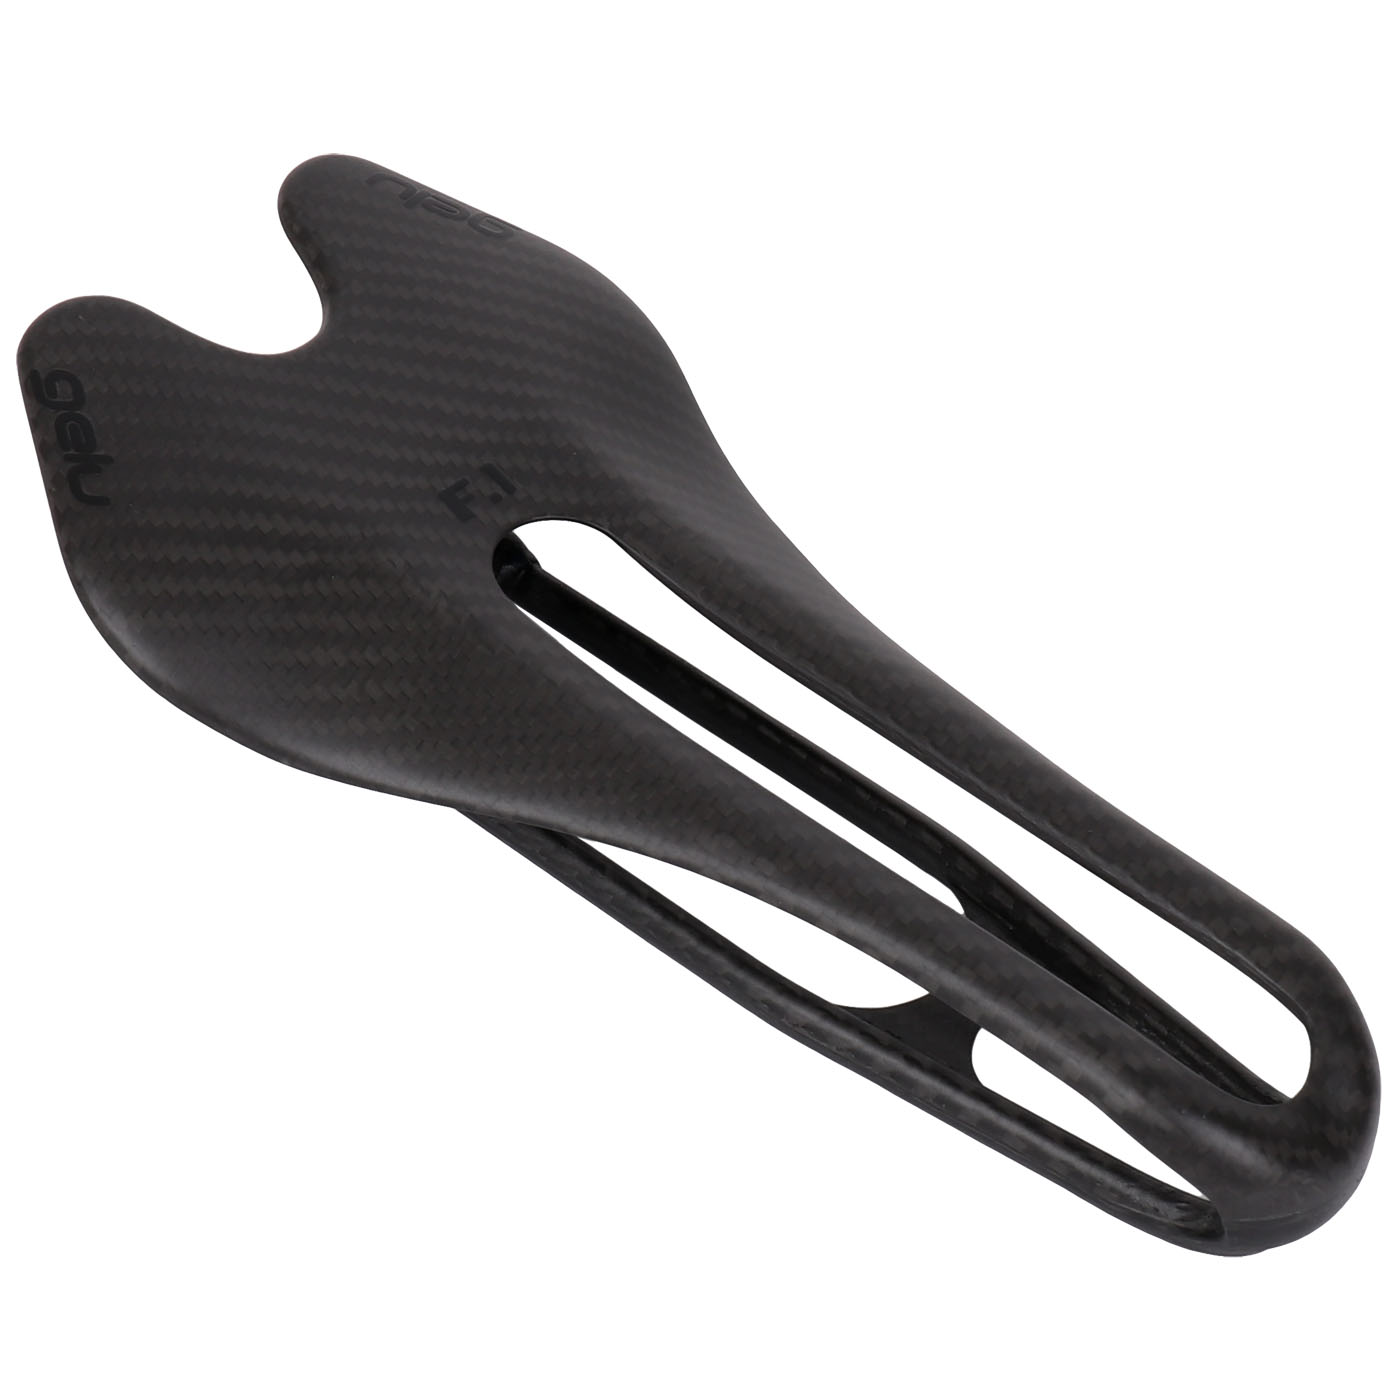 Productfoto van Gelu F1 Carbon Saddle - black Logos